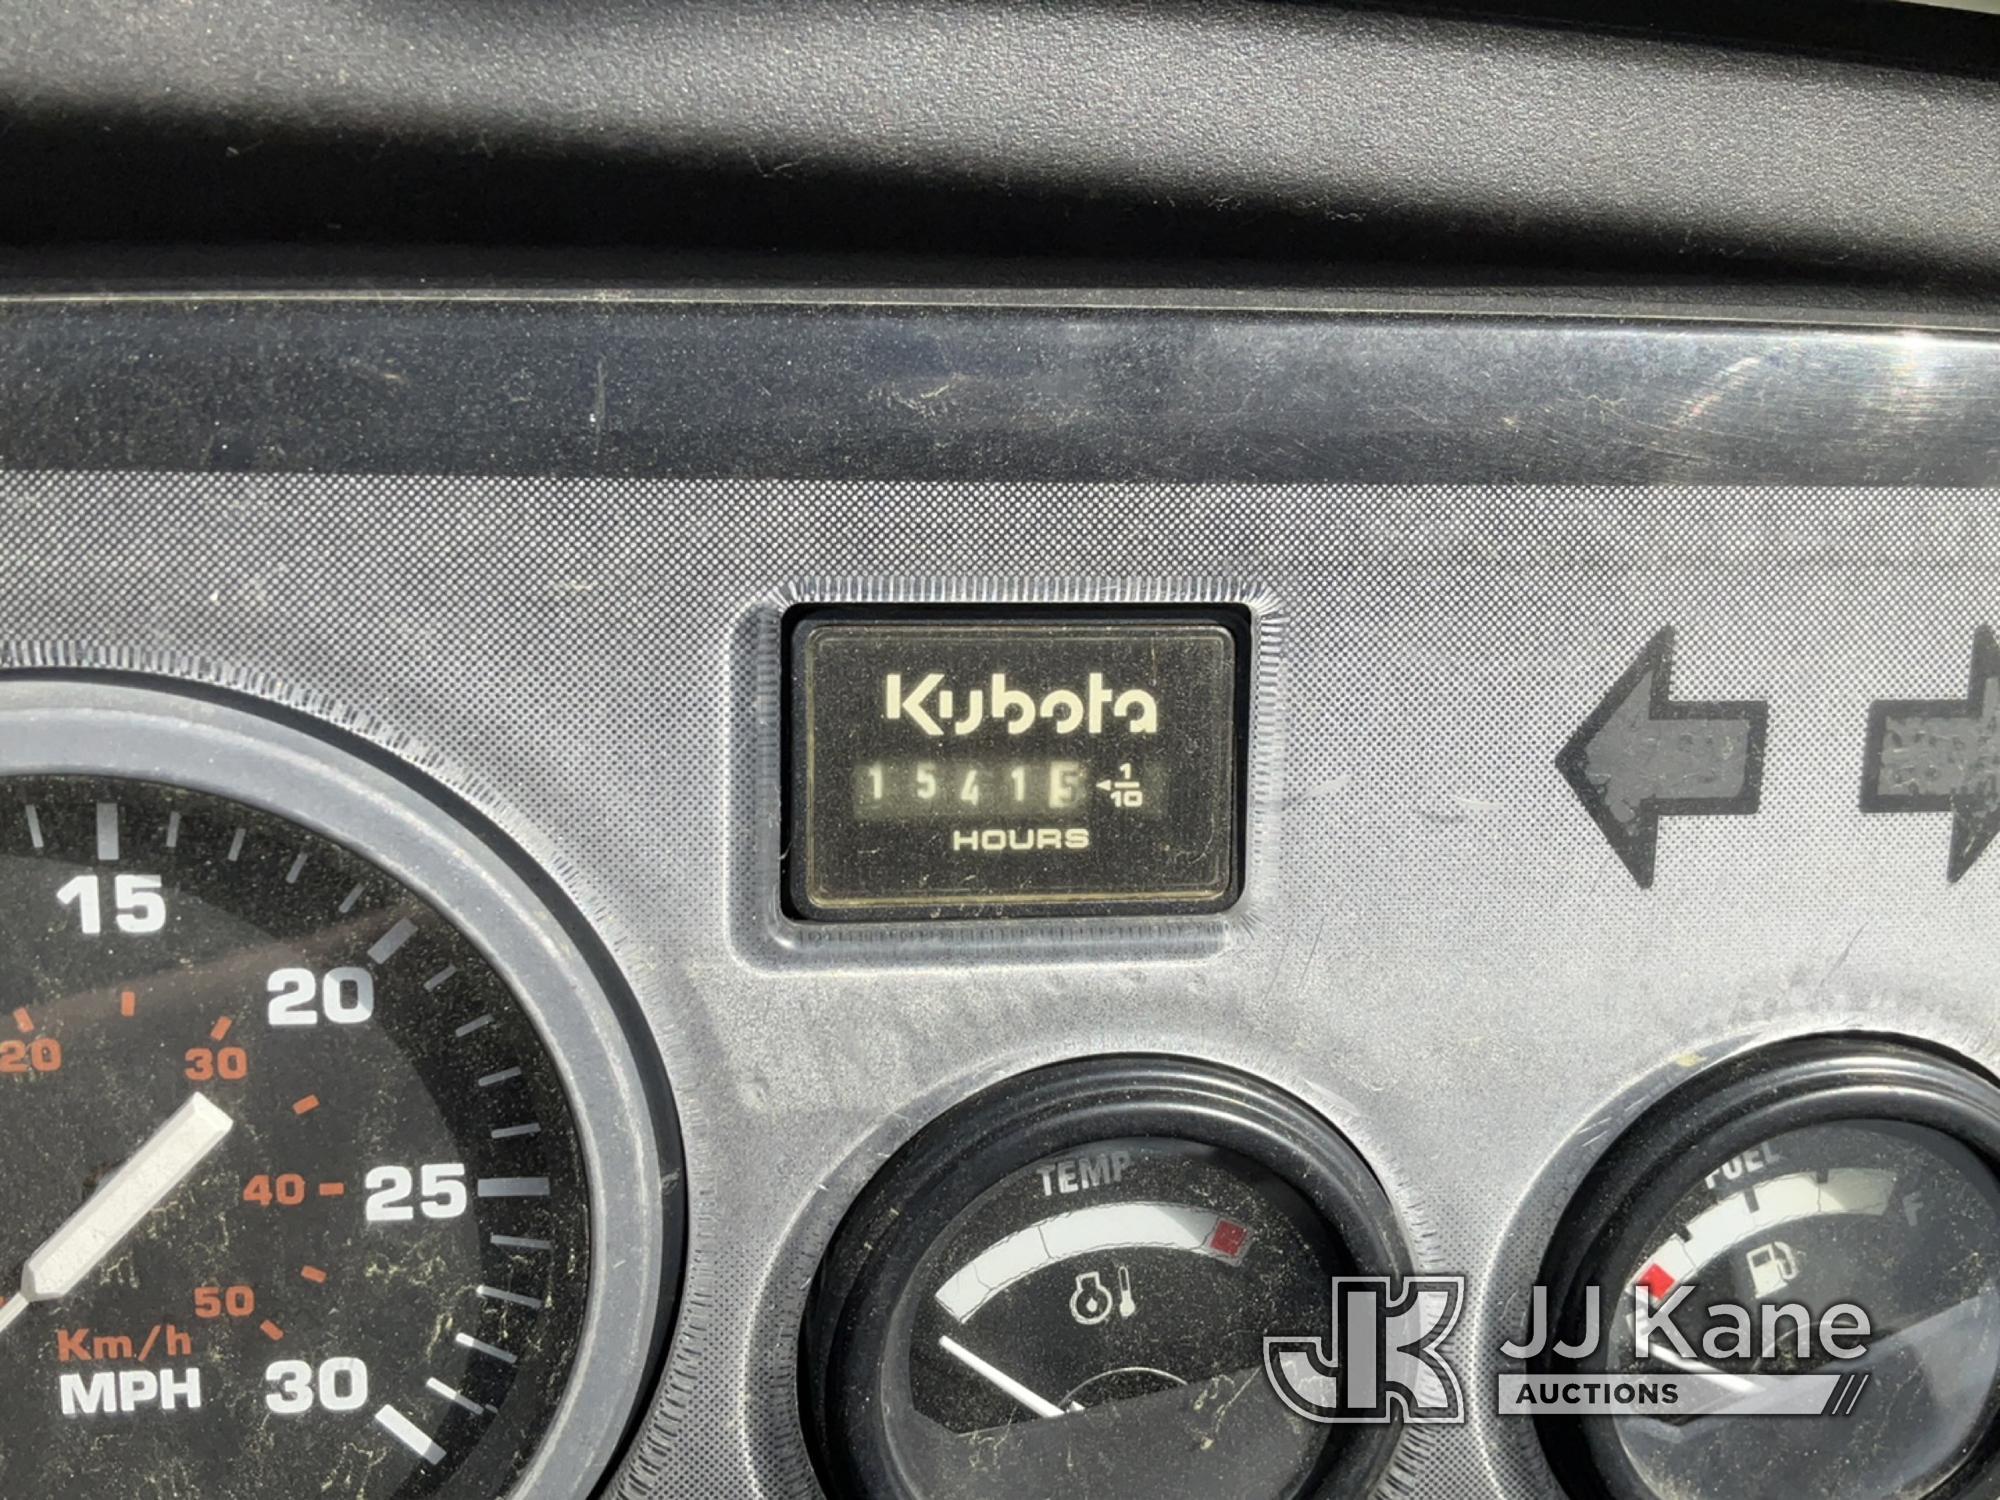 (Tipton, MO) 2007 Kubota RTV-900 4x4 Yard Cart No Title) (Not Running, Condition Unknown.